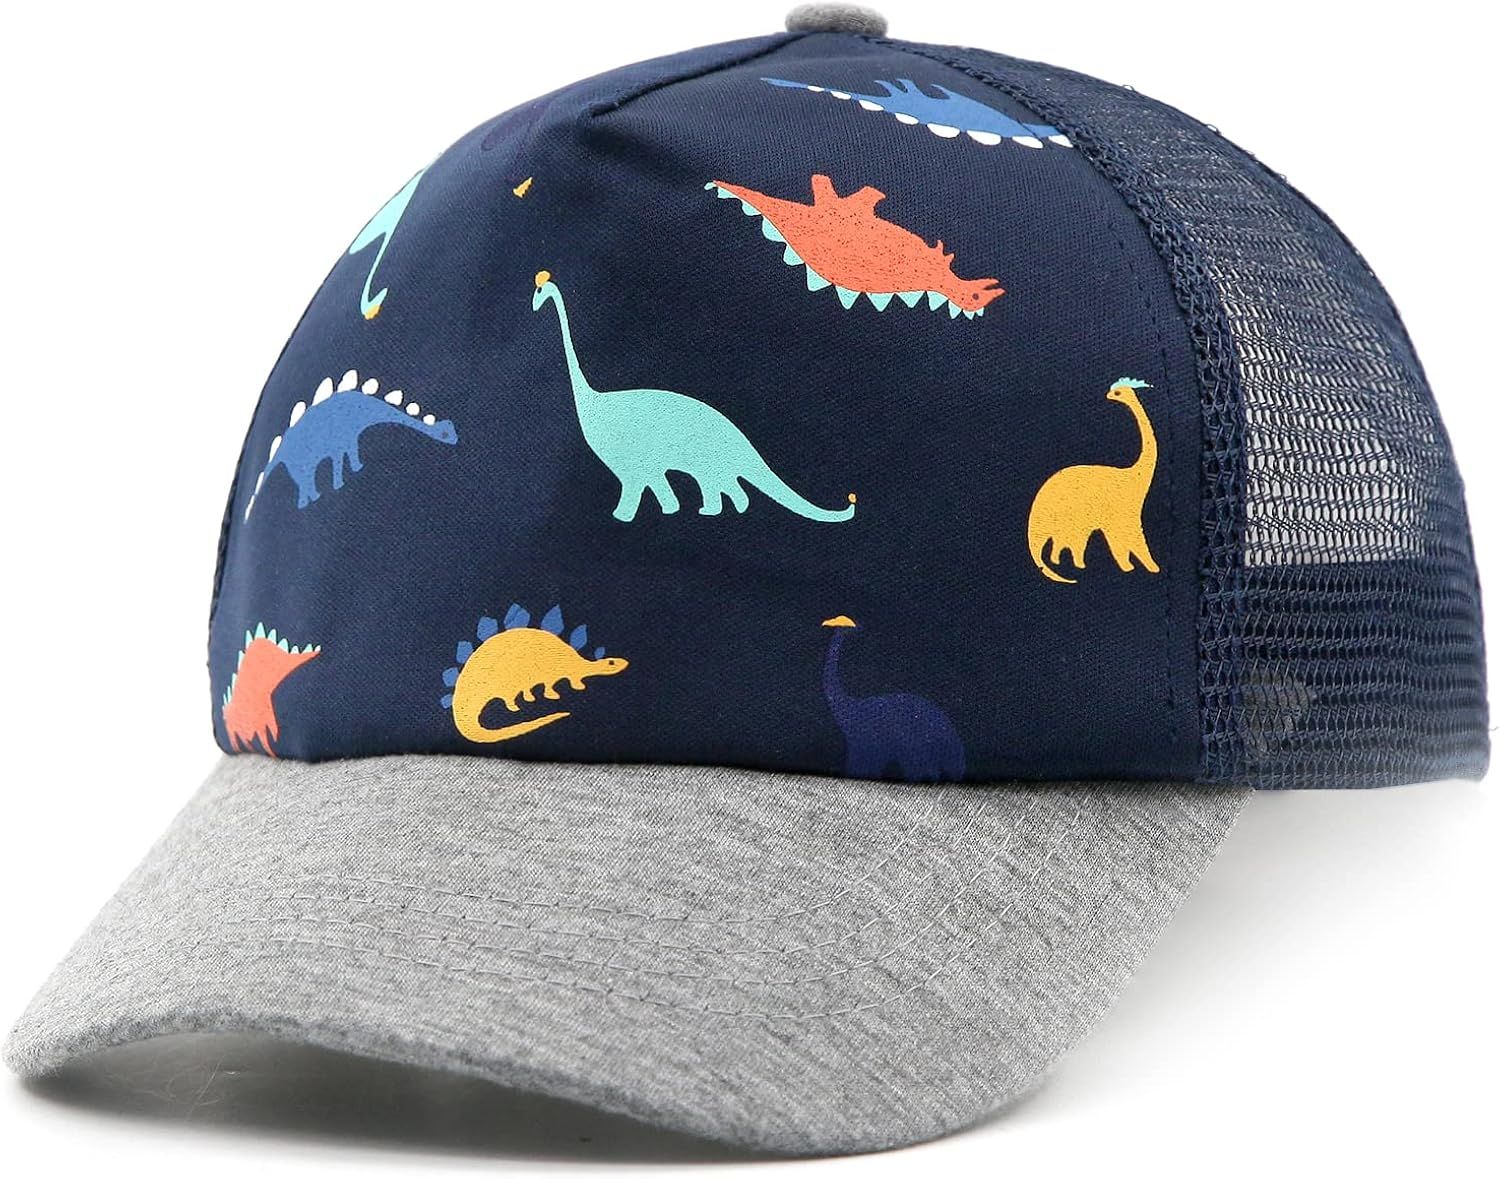 Hpegny Toddler Baseball hat Baby Cap Sun hat Printed Dinosaur Motif Kids Boys Girls Age 2t-4t 4-8 | Amazon (US)